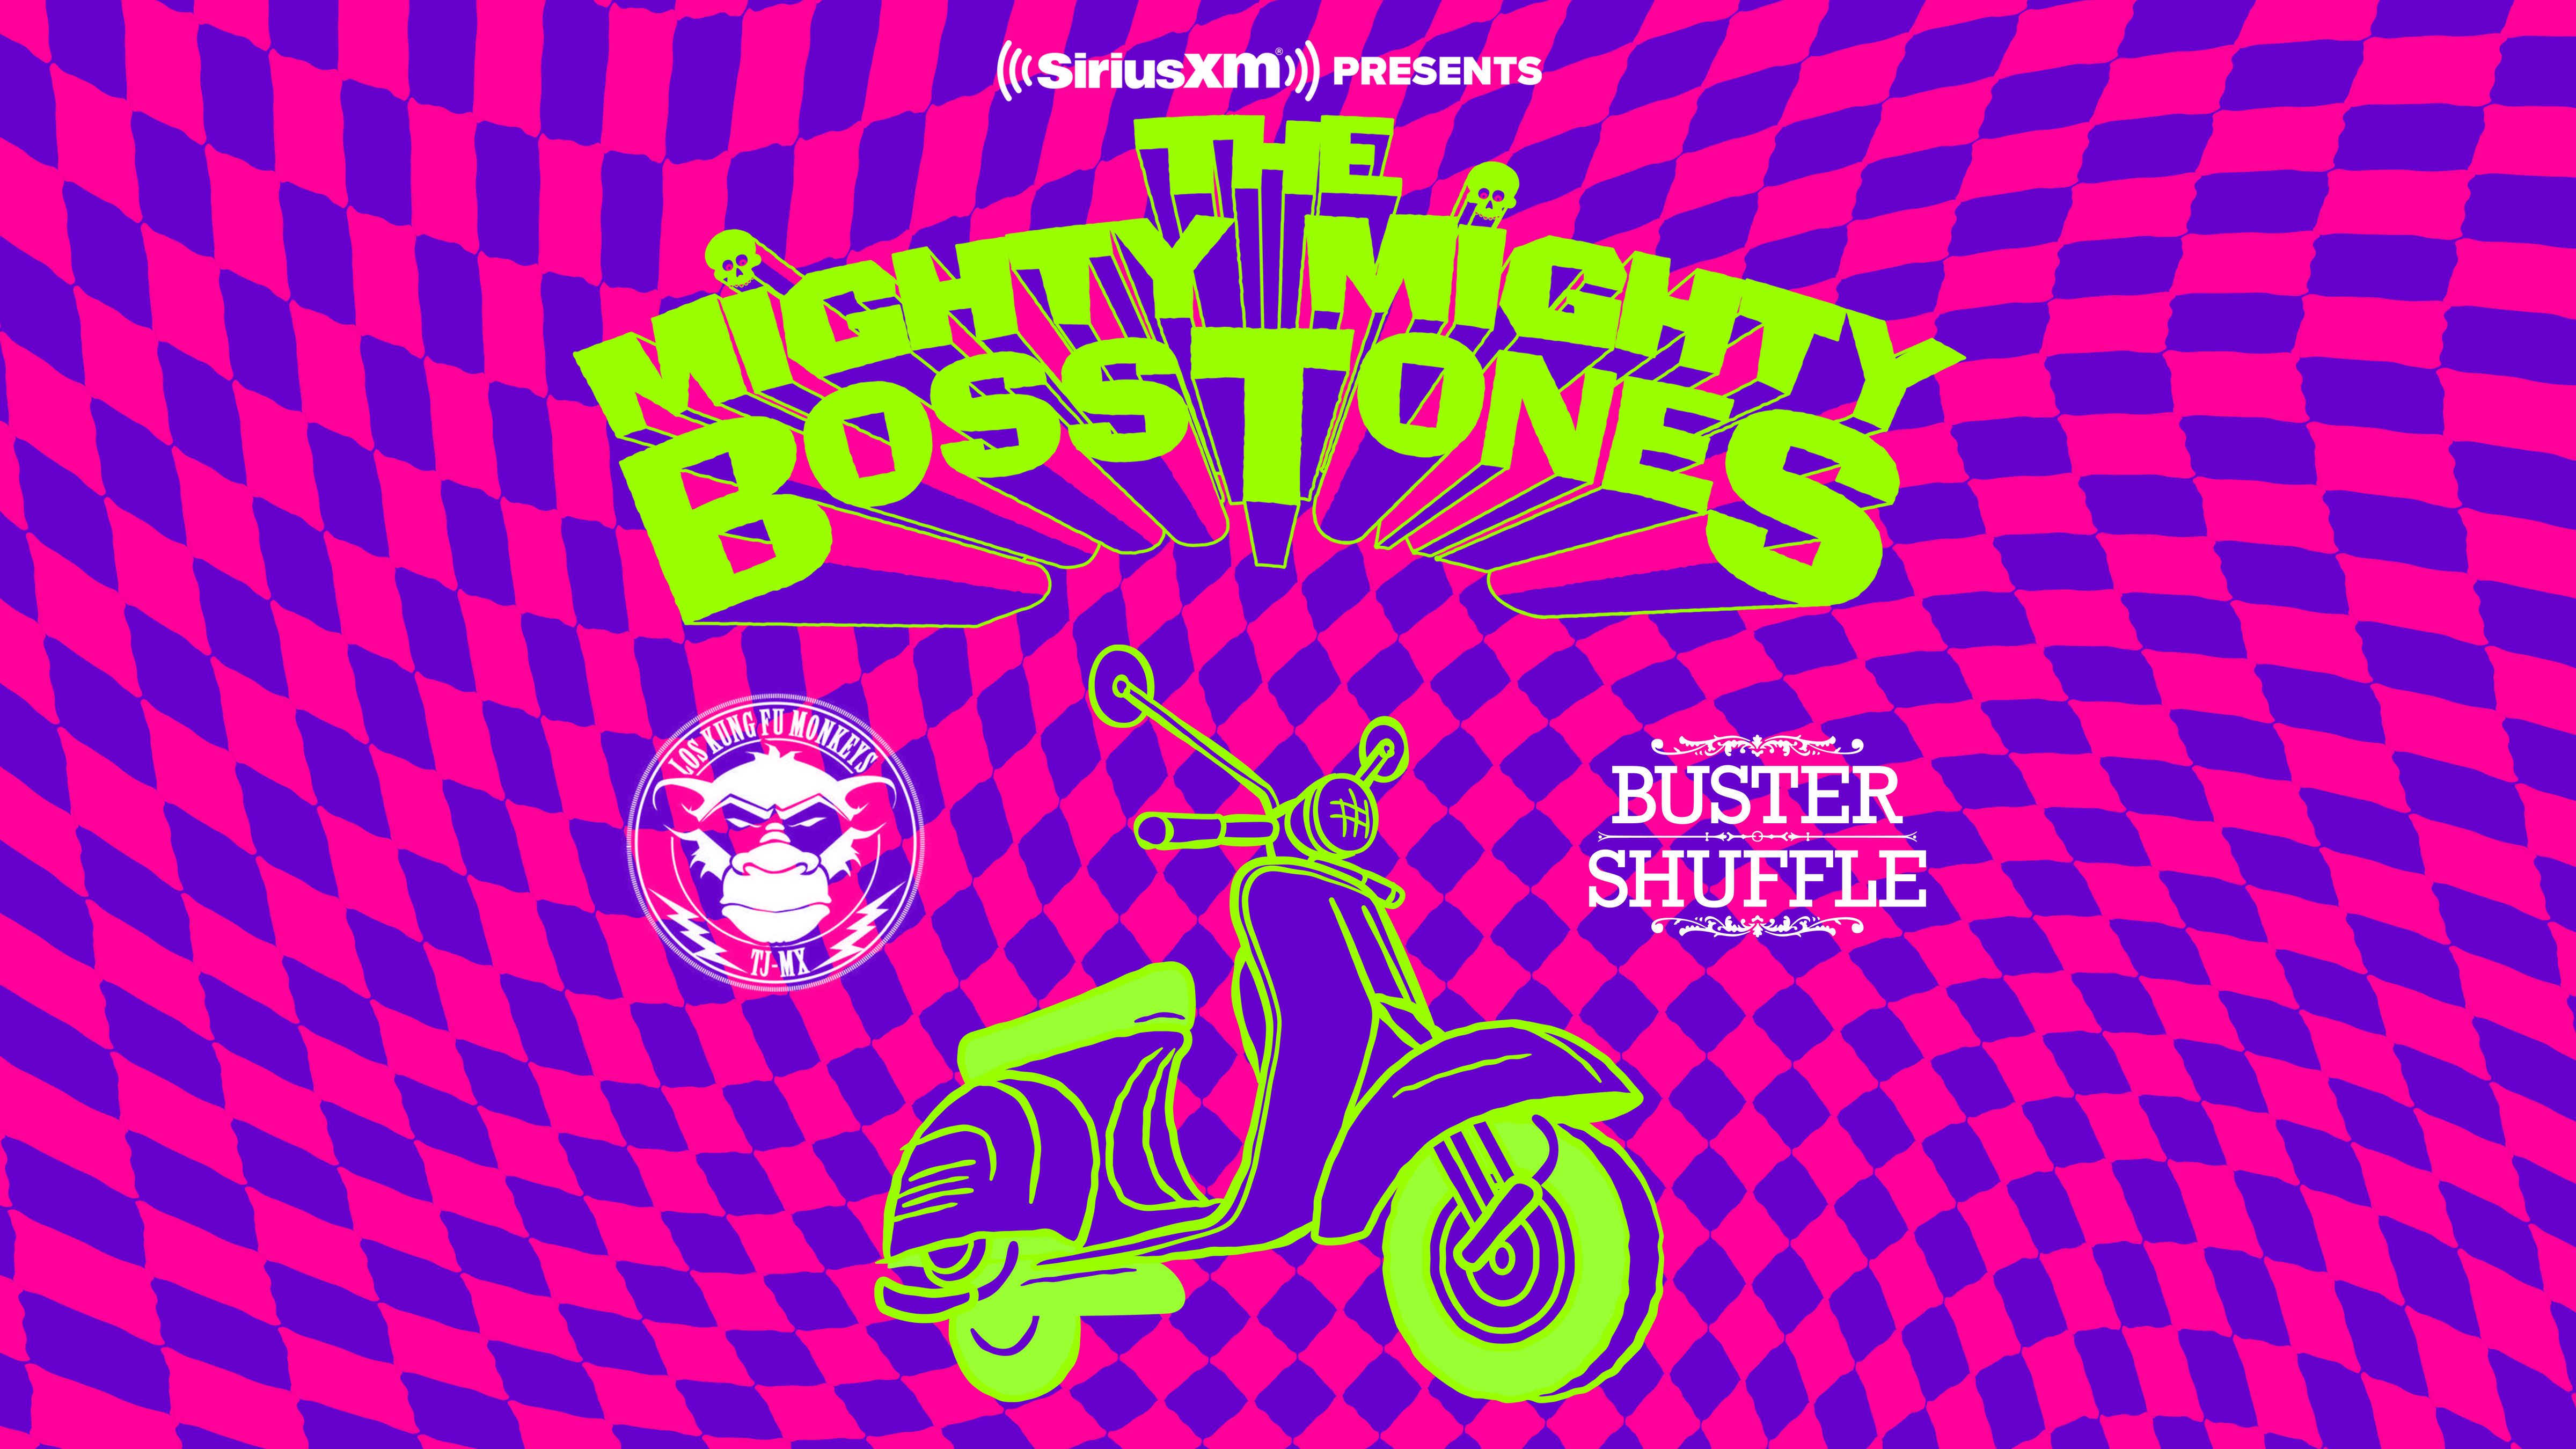 mighty mighty bosstones tour